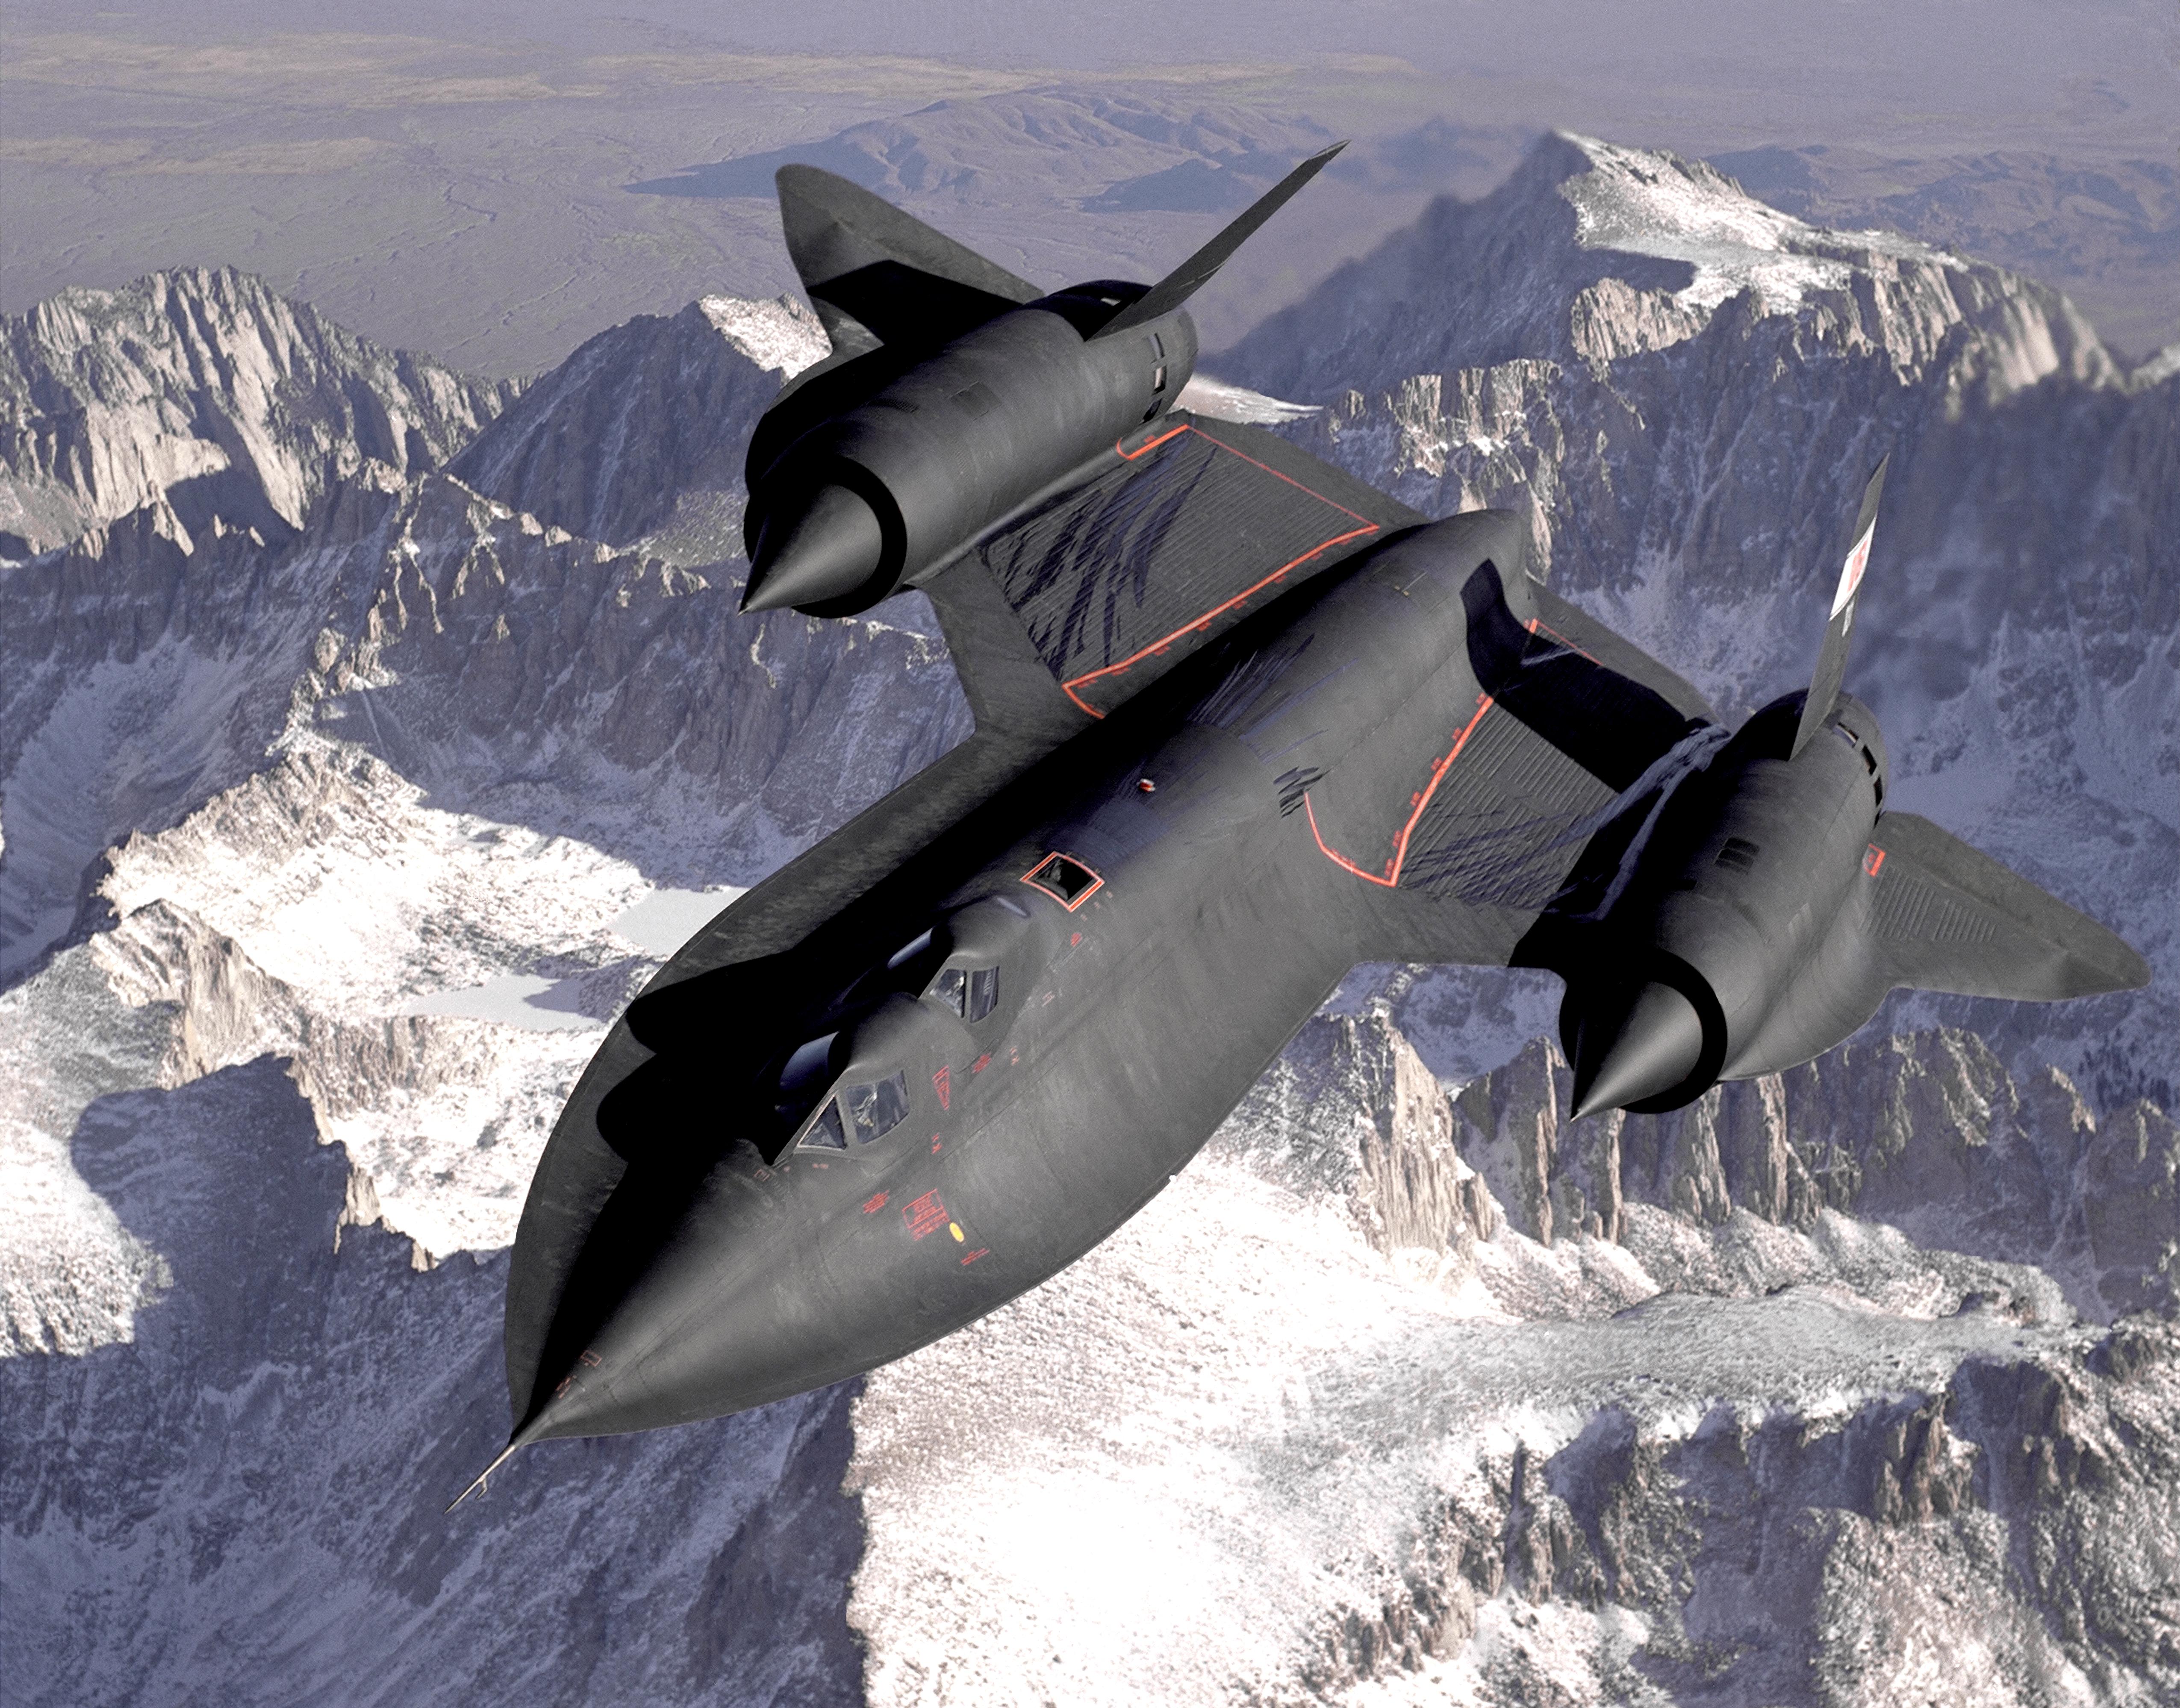 http://upload.wikimedia.org/wikipedia/commons/9/97/Lockheed_SR-71_Blackbird.jpg